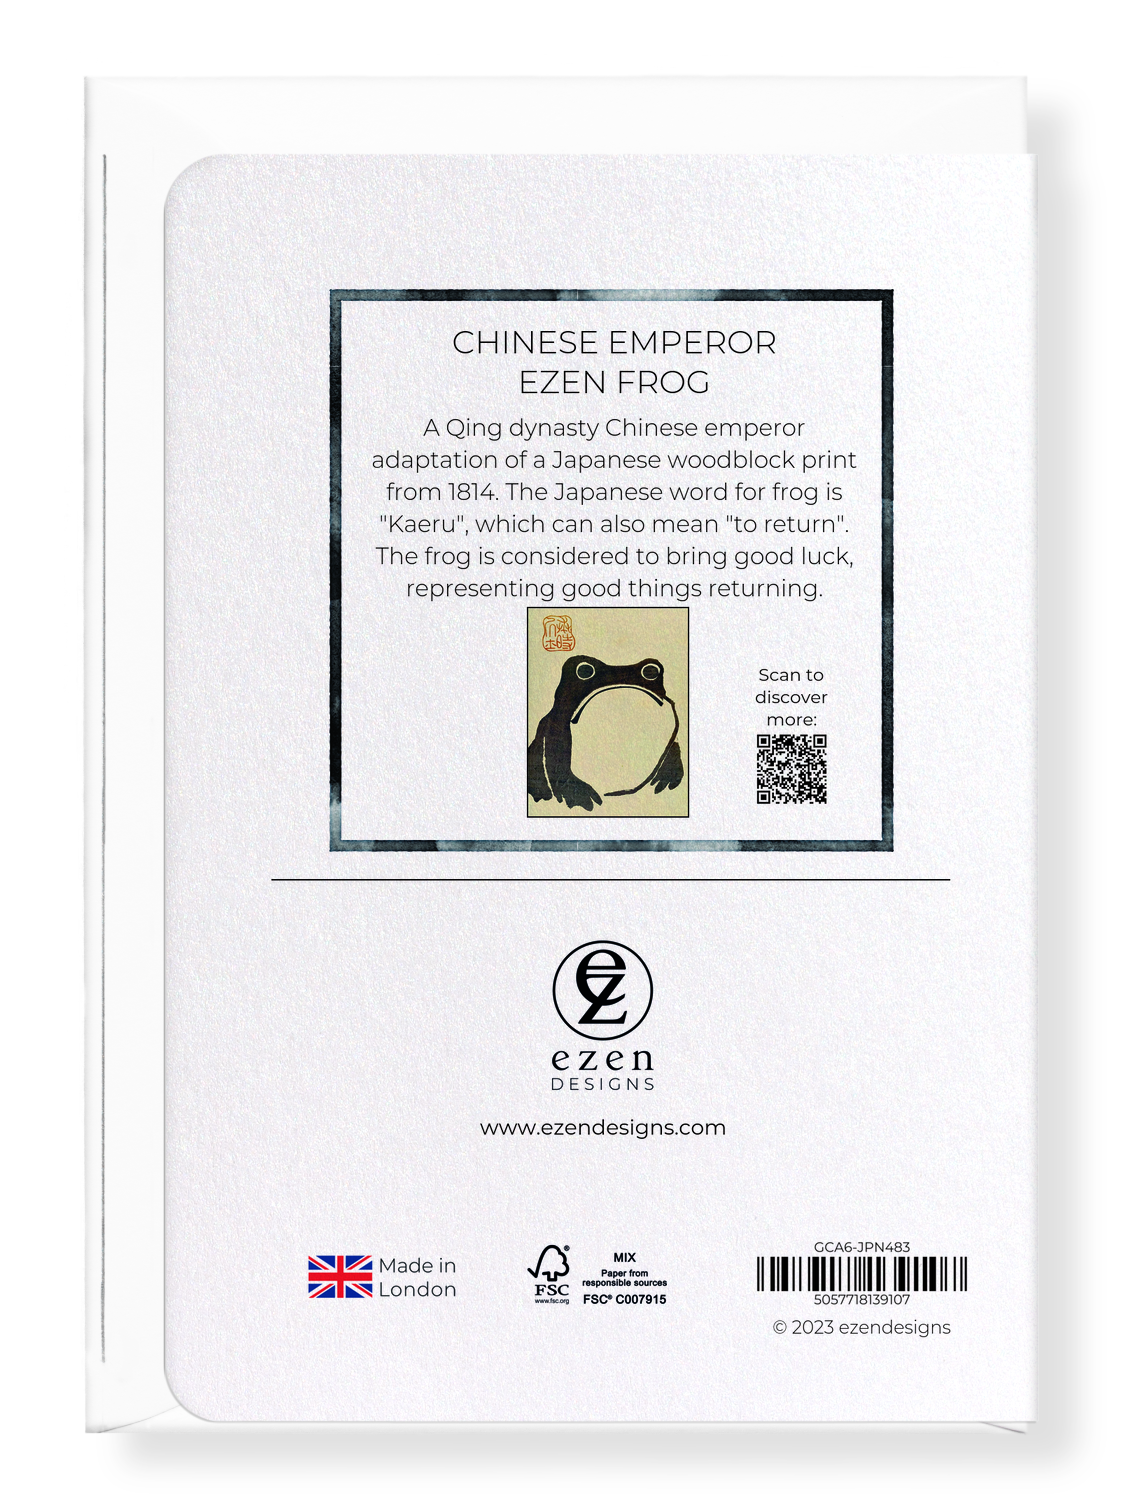 Ezen Designs - CHINESE EMPEROR EZEN FROG - Greeting Card - Back